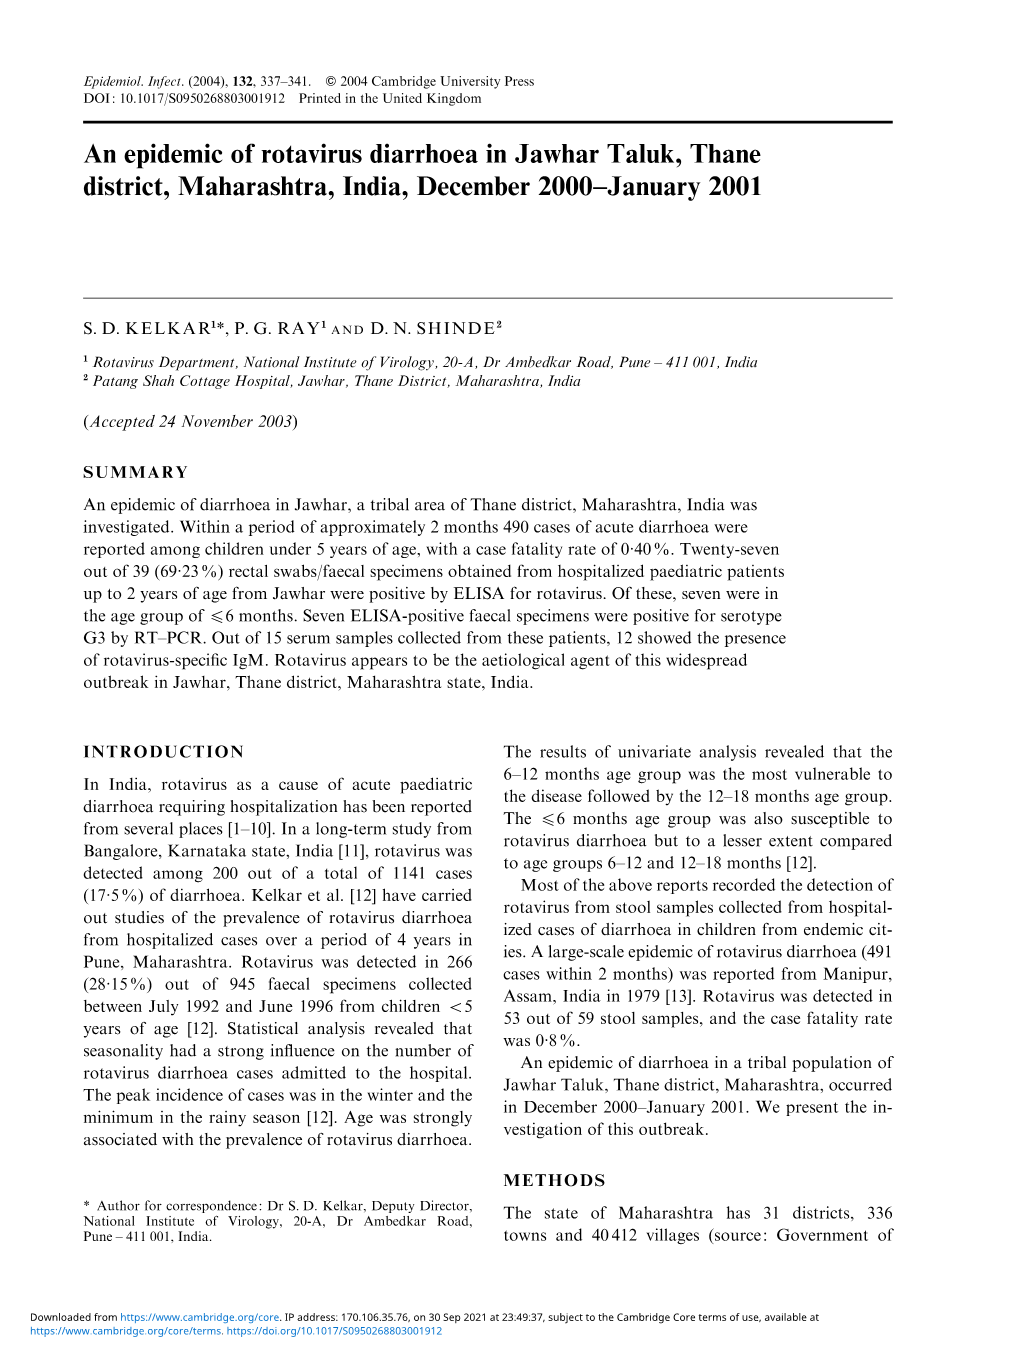 An Epidemic of Rotavirus Diarrhoea in Jawhar Taluk, Thane District, Maharashtra, India, December 2000&#8211;January 2001